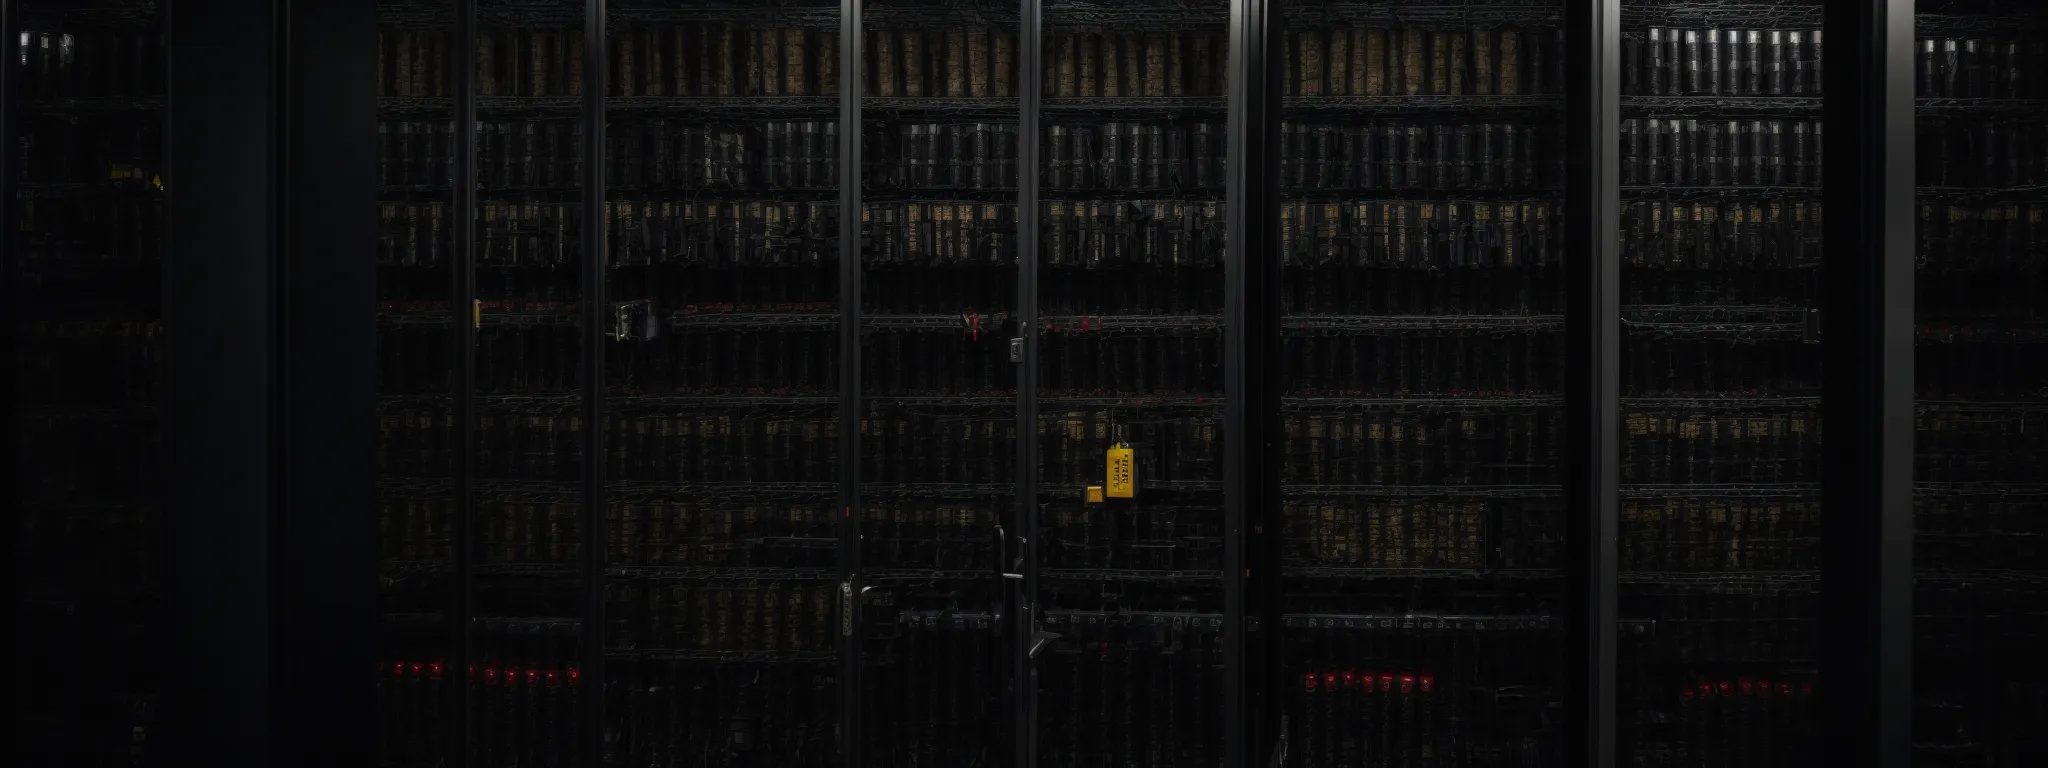 a locked padlock overlaying a series of server racks symbolizing secure hosting.